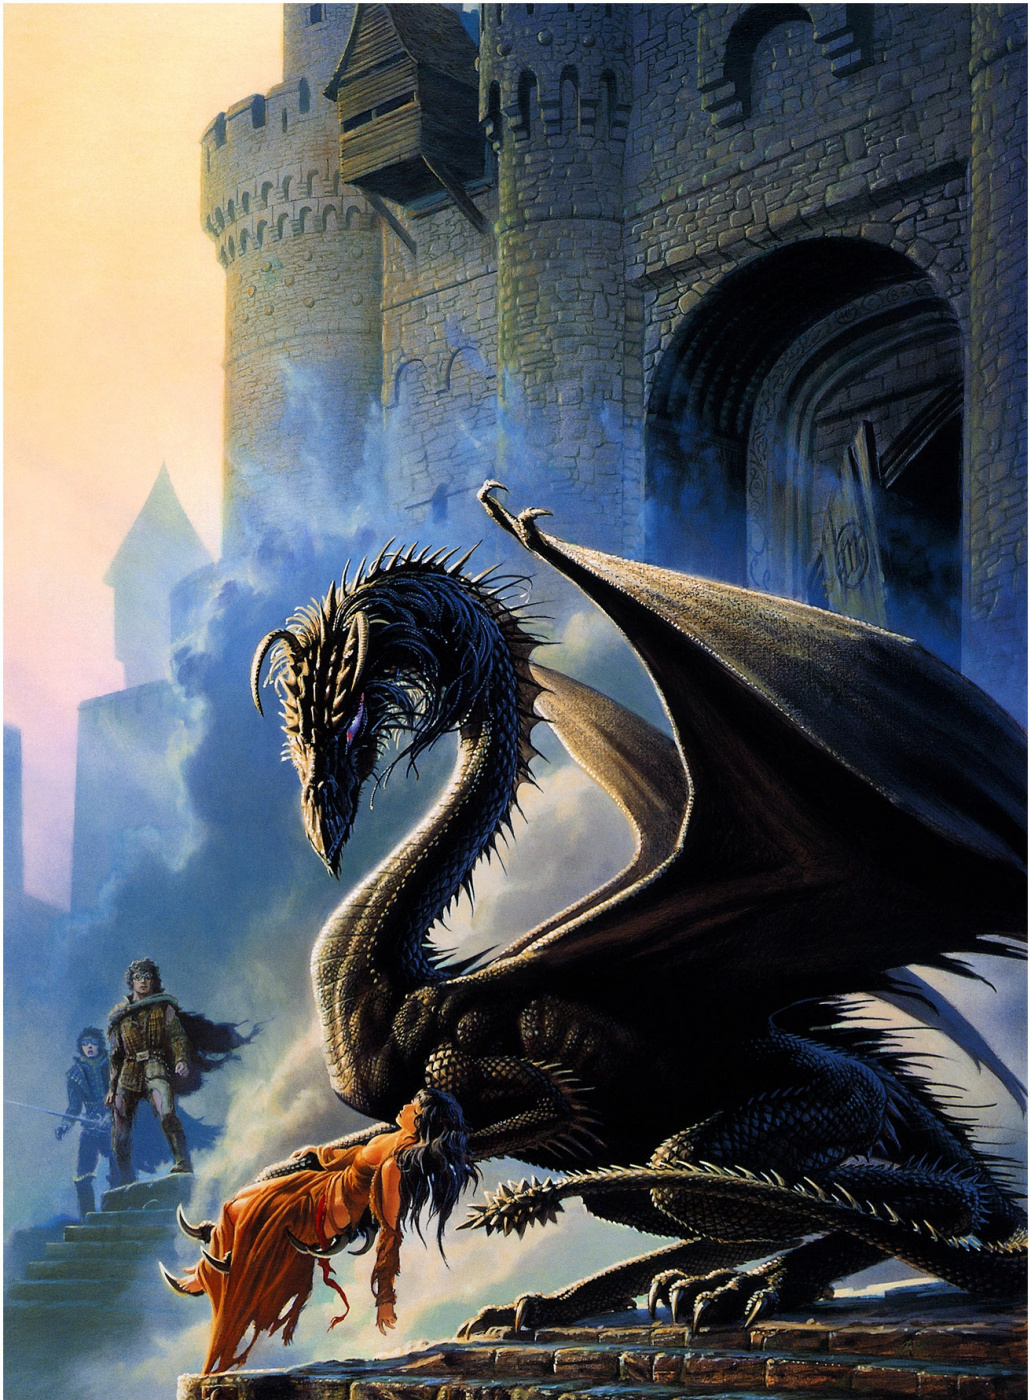 Michael Whelan. The curse of the dragon